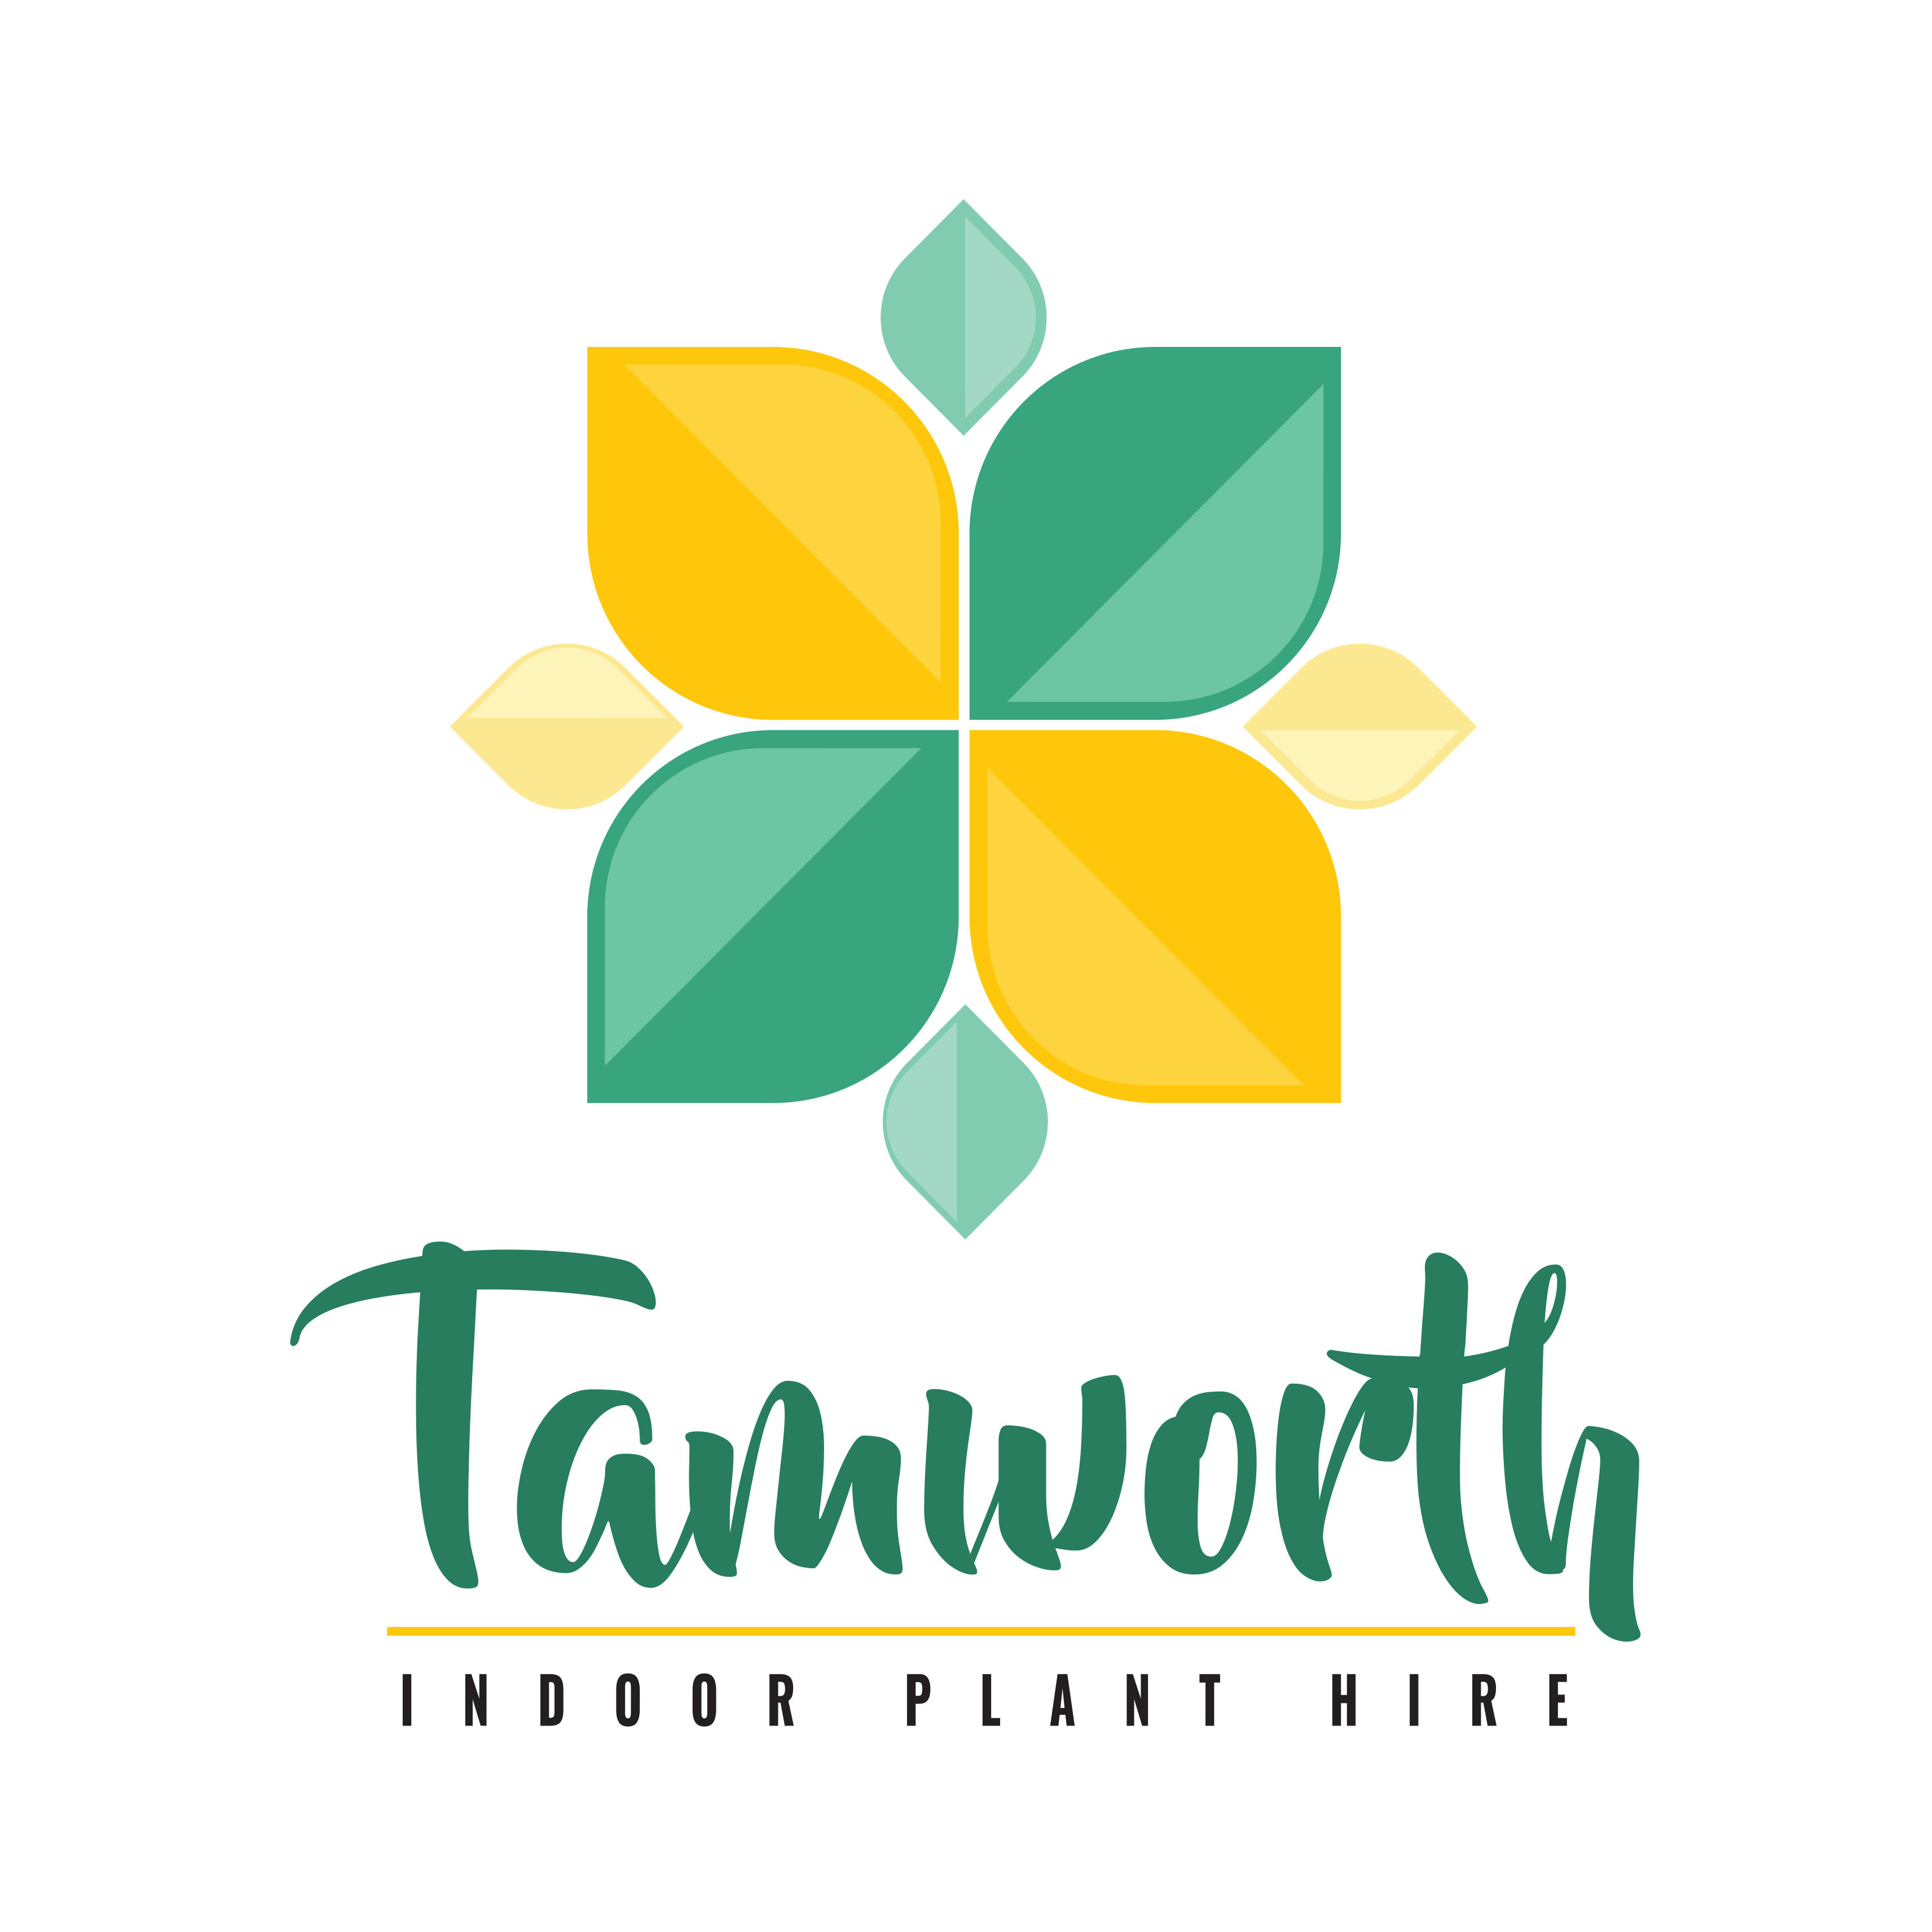 Tamworth Indoor Plant Hire Logo